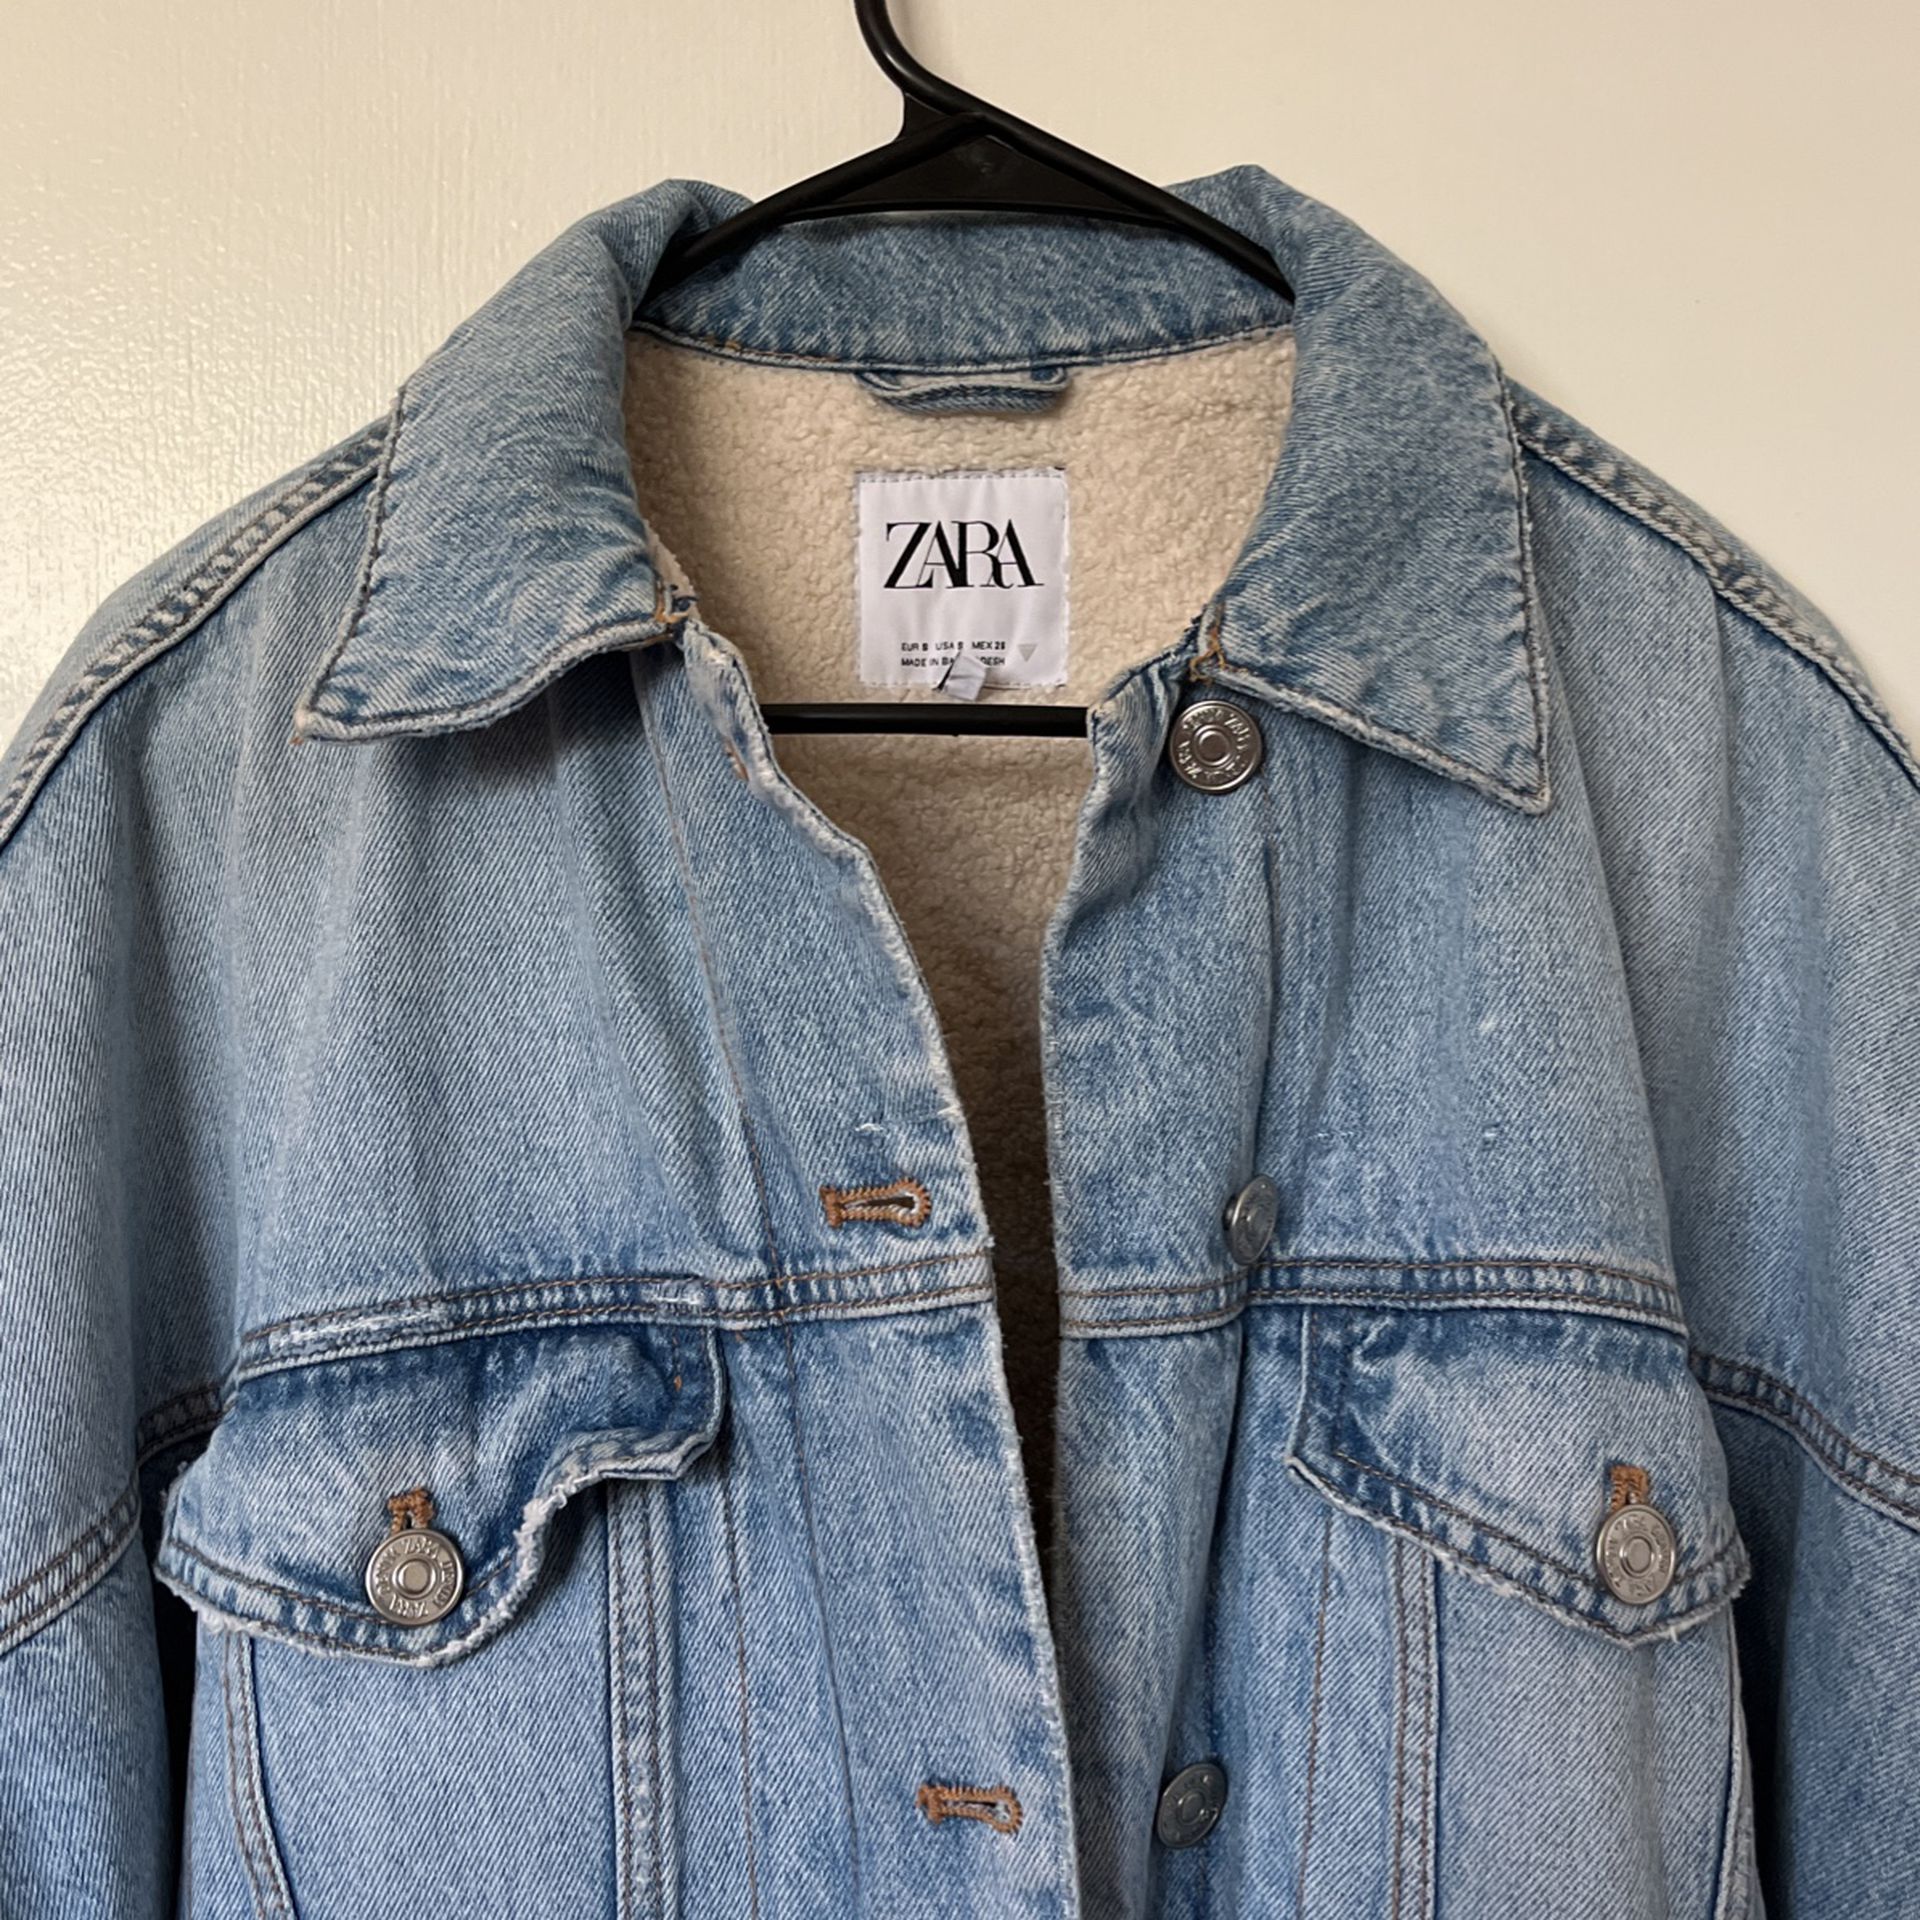 Original Zara denim Jacket